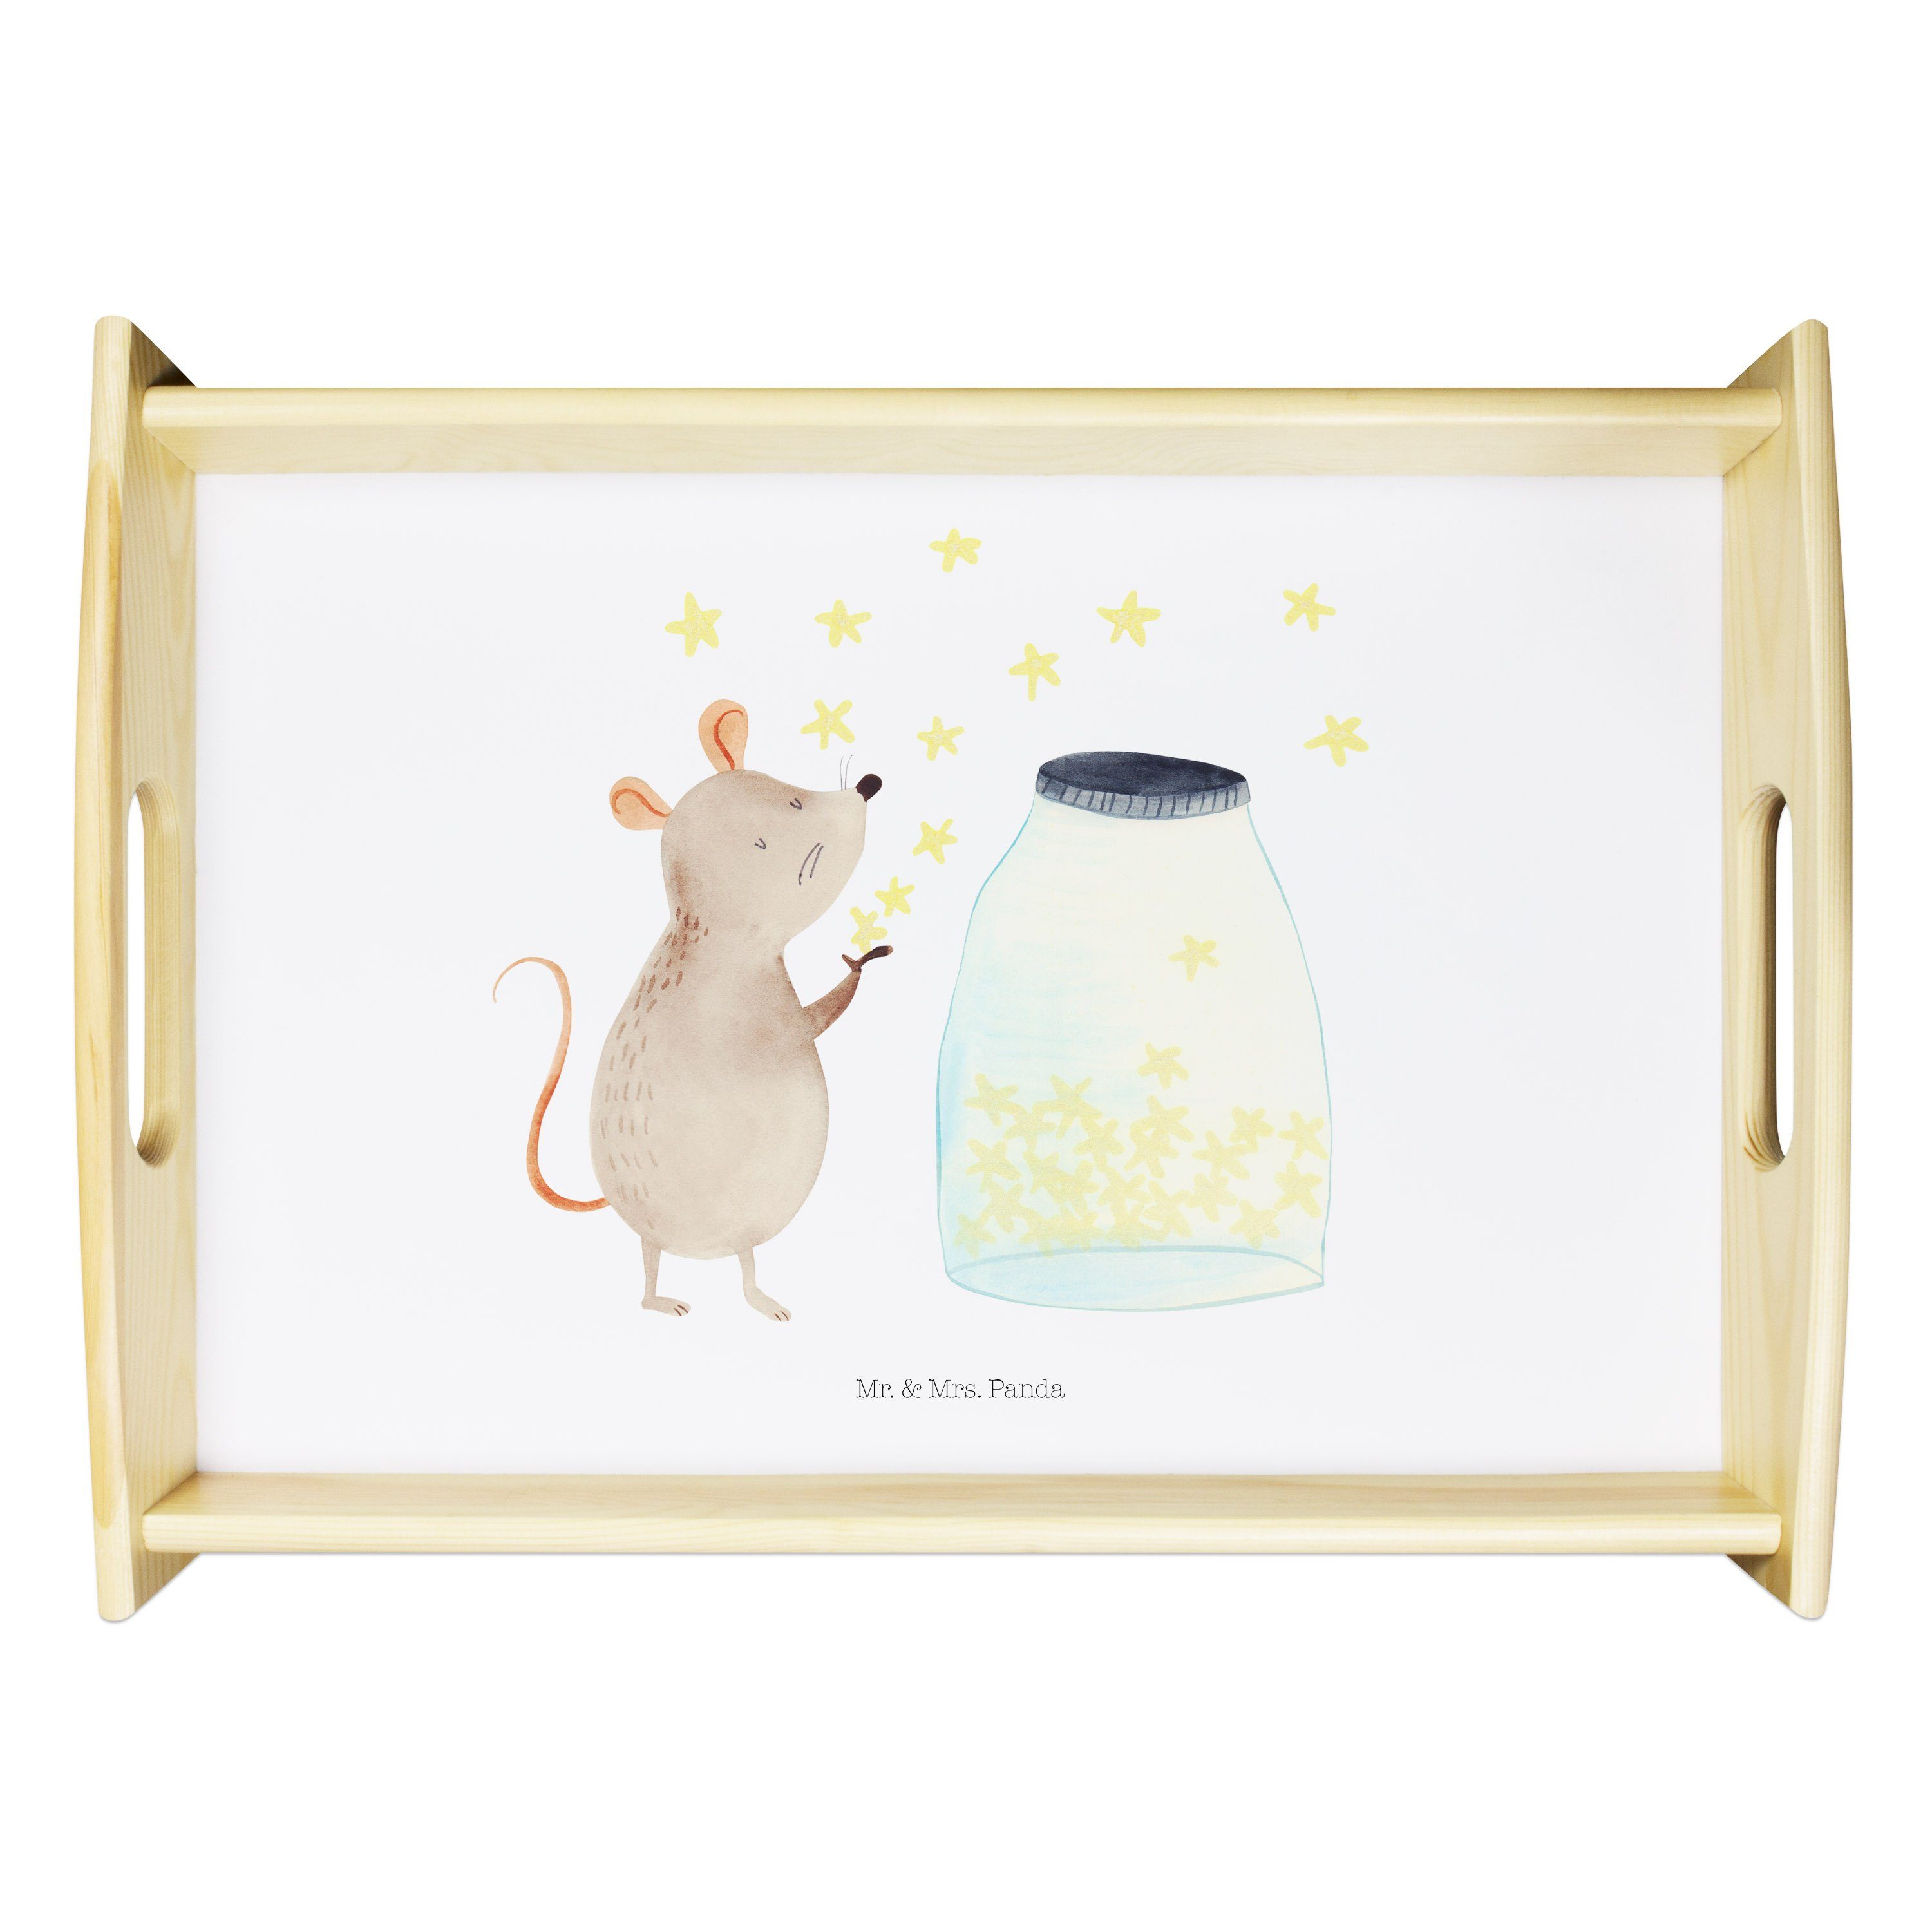 Mr. & Mrs. Panda Tablett Maus Sterne - Weiß - Geschenk, Tiere, Dekotablett, Gute Laune, lustig, Echtholz lasiert, (1-tlg)